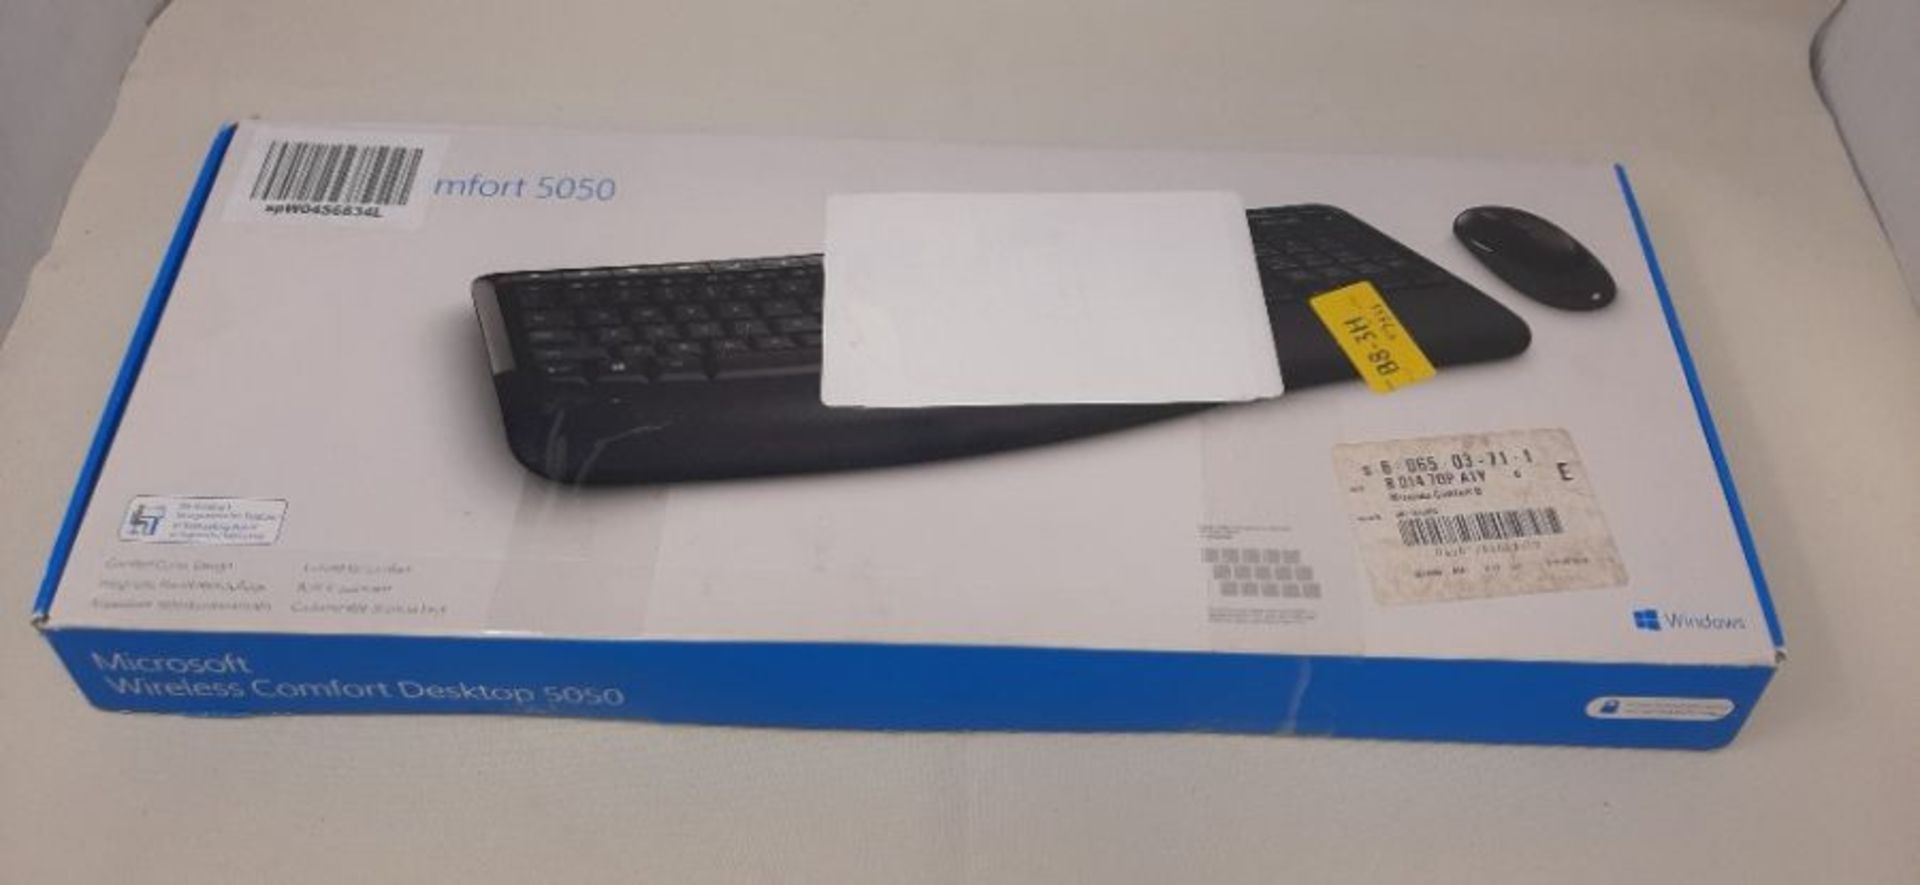 RRP £75.00 Microsoft Wireless Comfort Desktop 5050 - keyboards (USB, QWERTZ, Wireless, Battery, W - Image 2 of 3